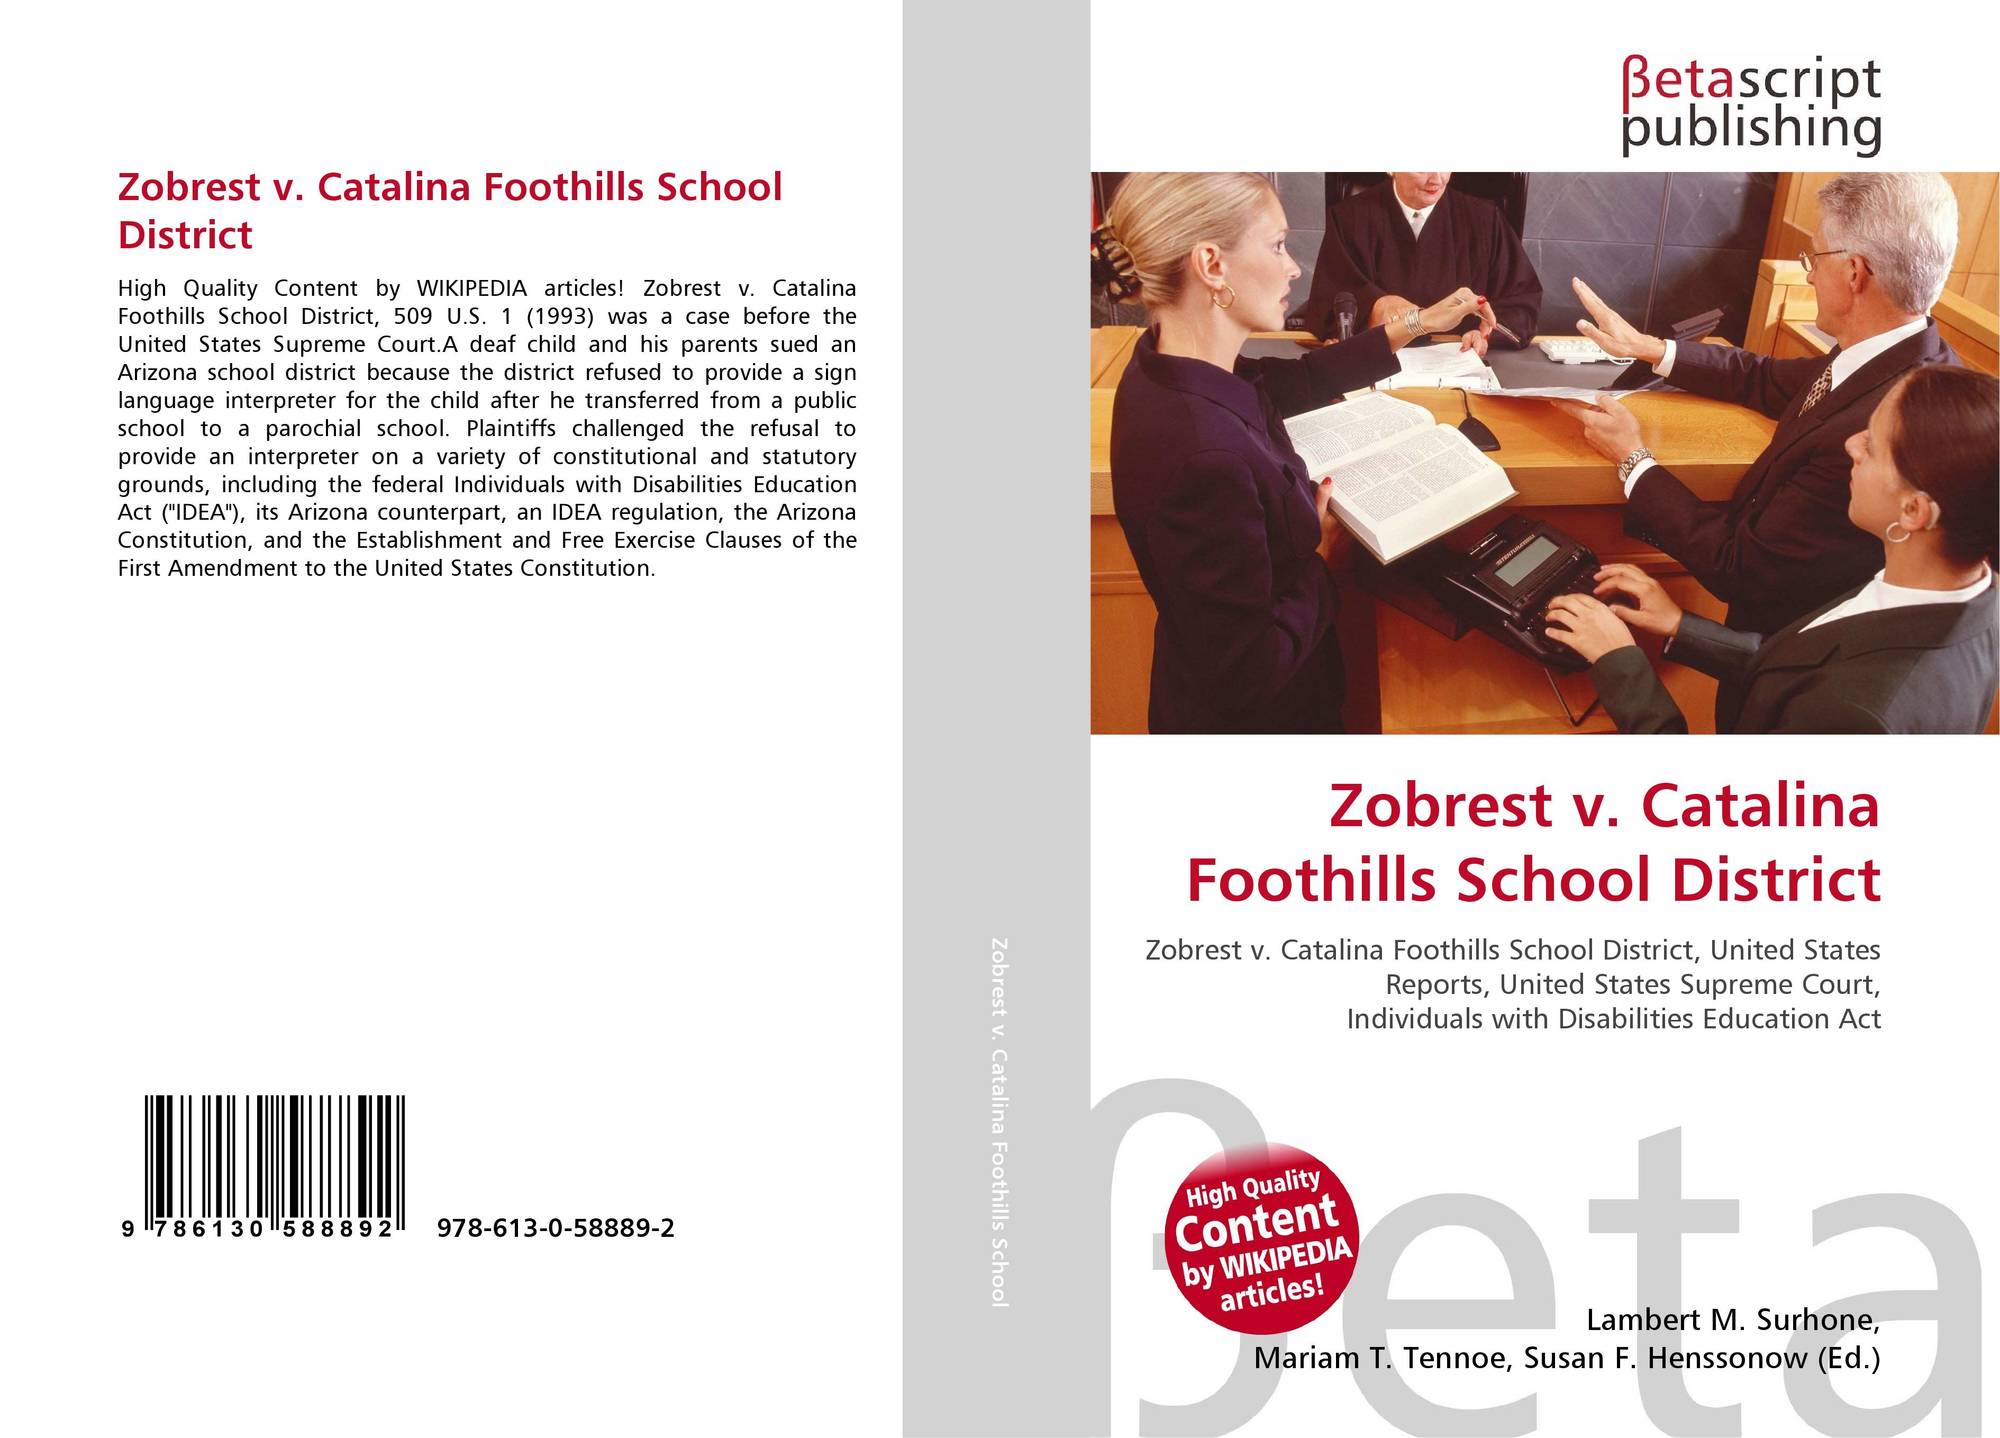 Zobrest v. Catalina Foothills School District, 978-613-0-58889-2